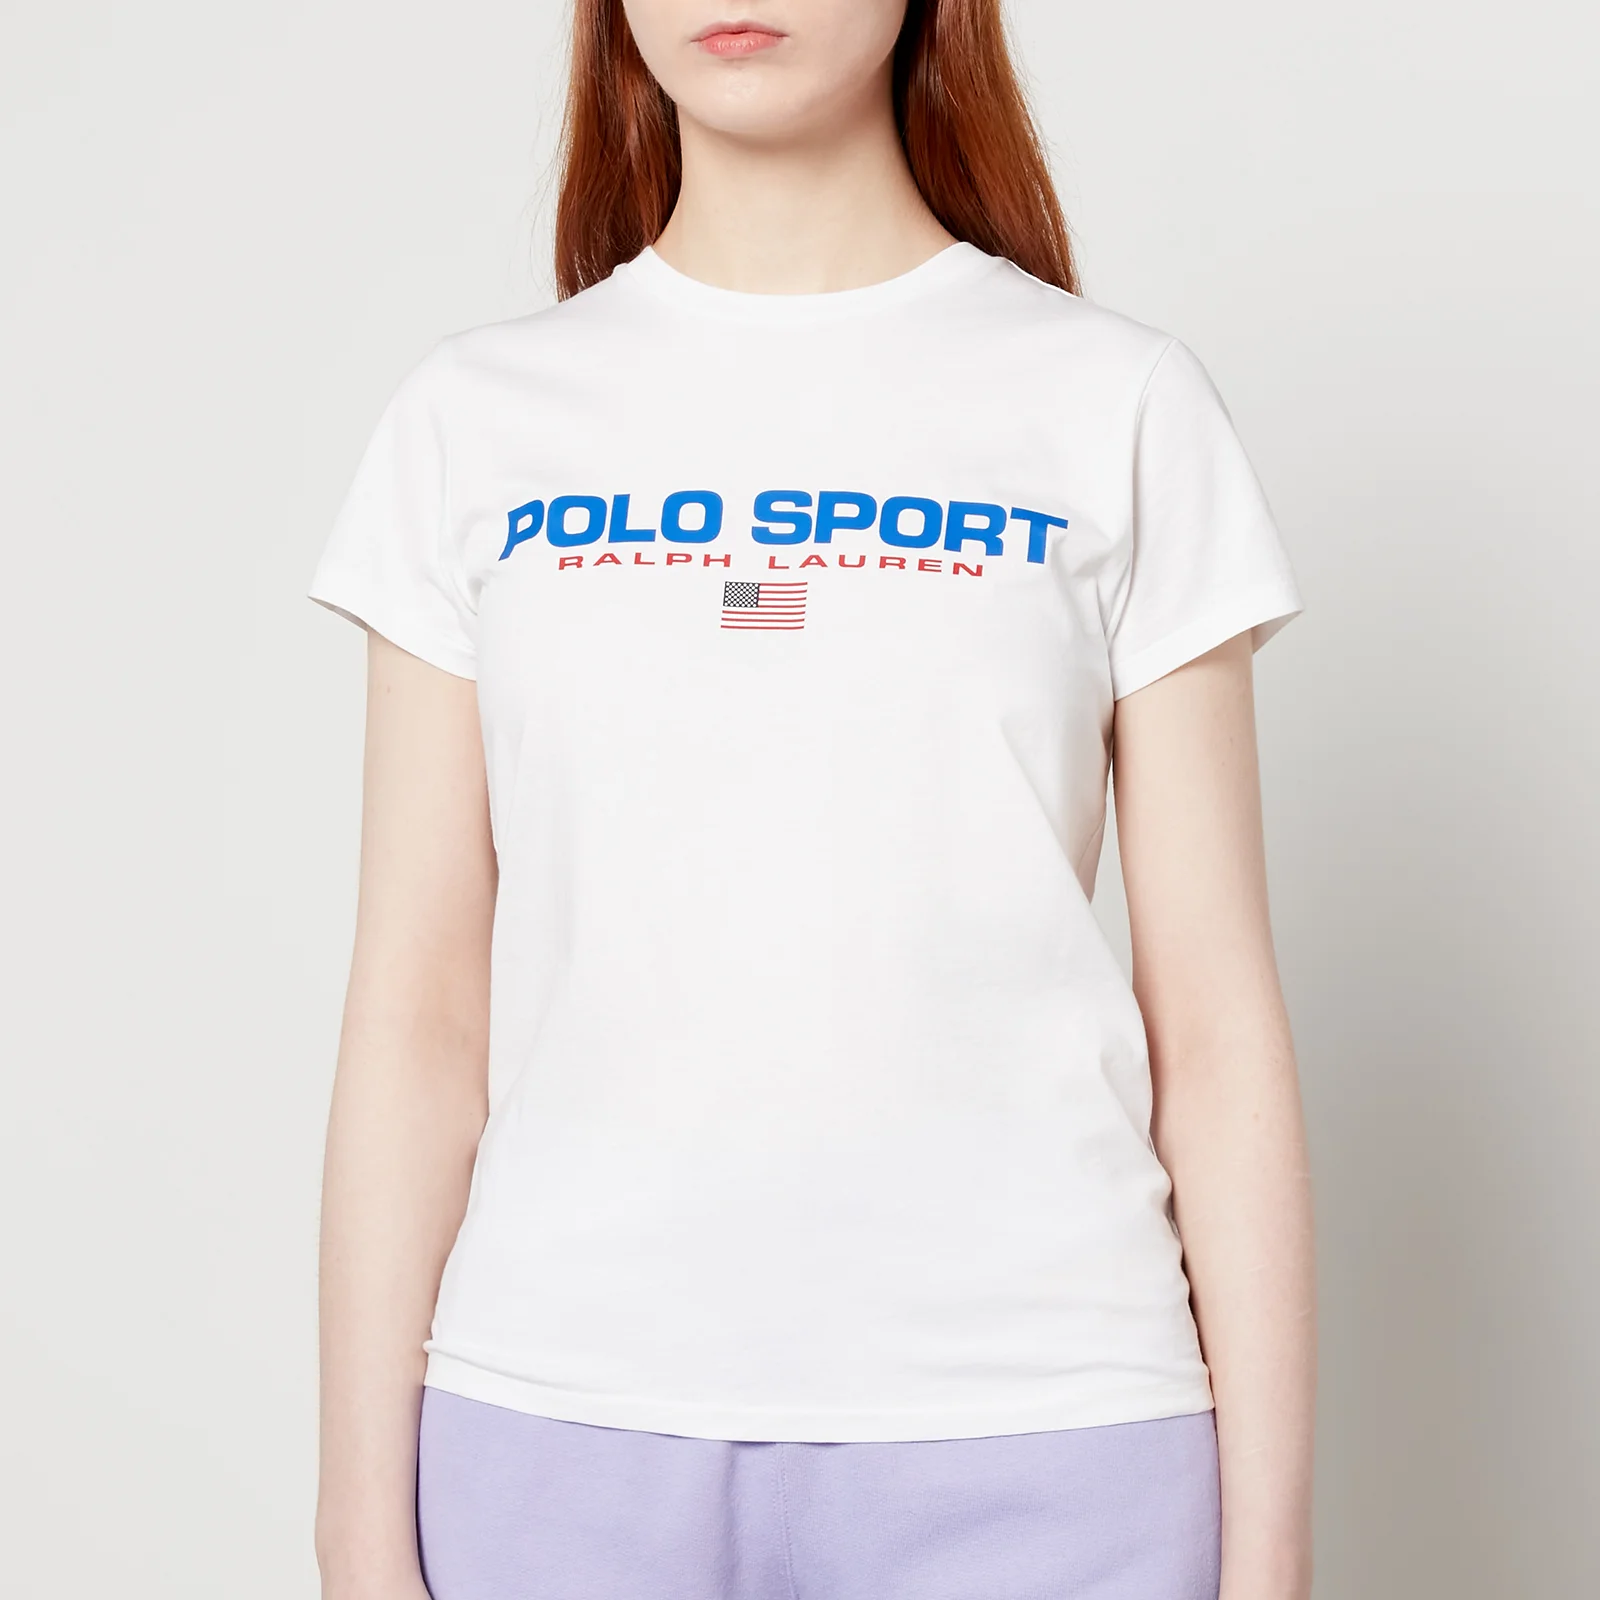 Polo Ralph Lauren Women's Polo Sport T-Shirt - White Image 1